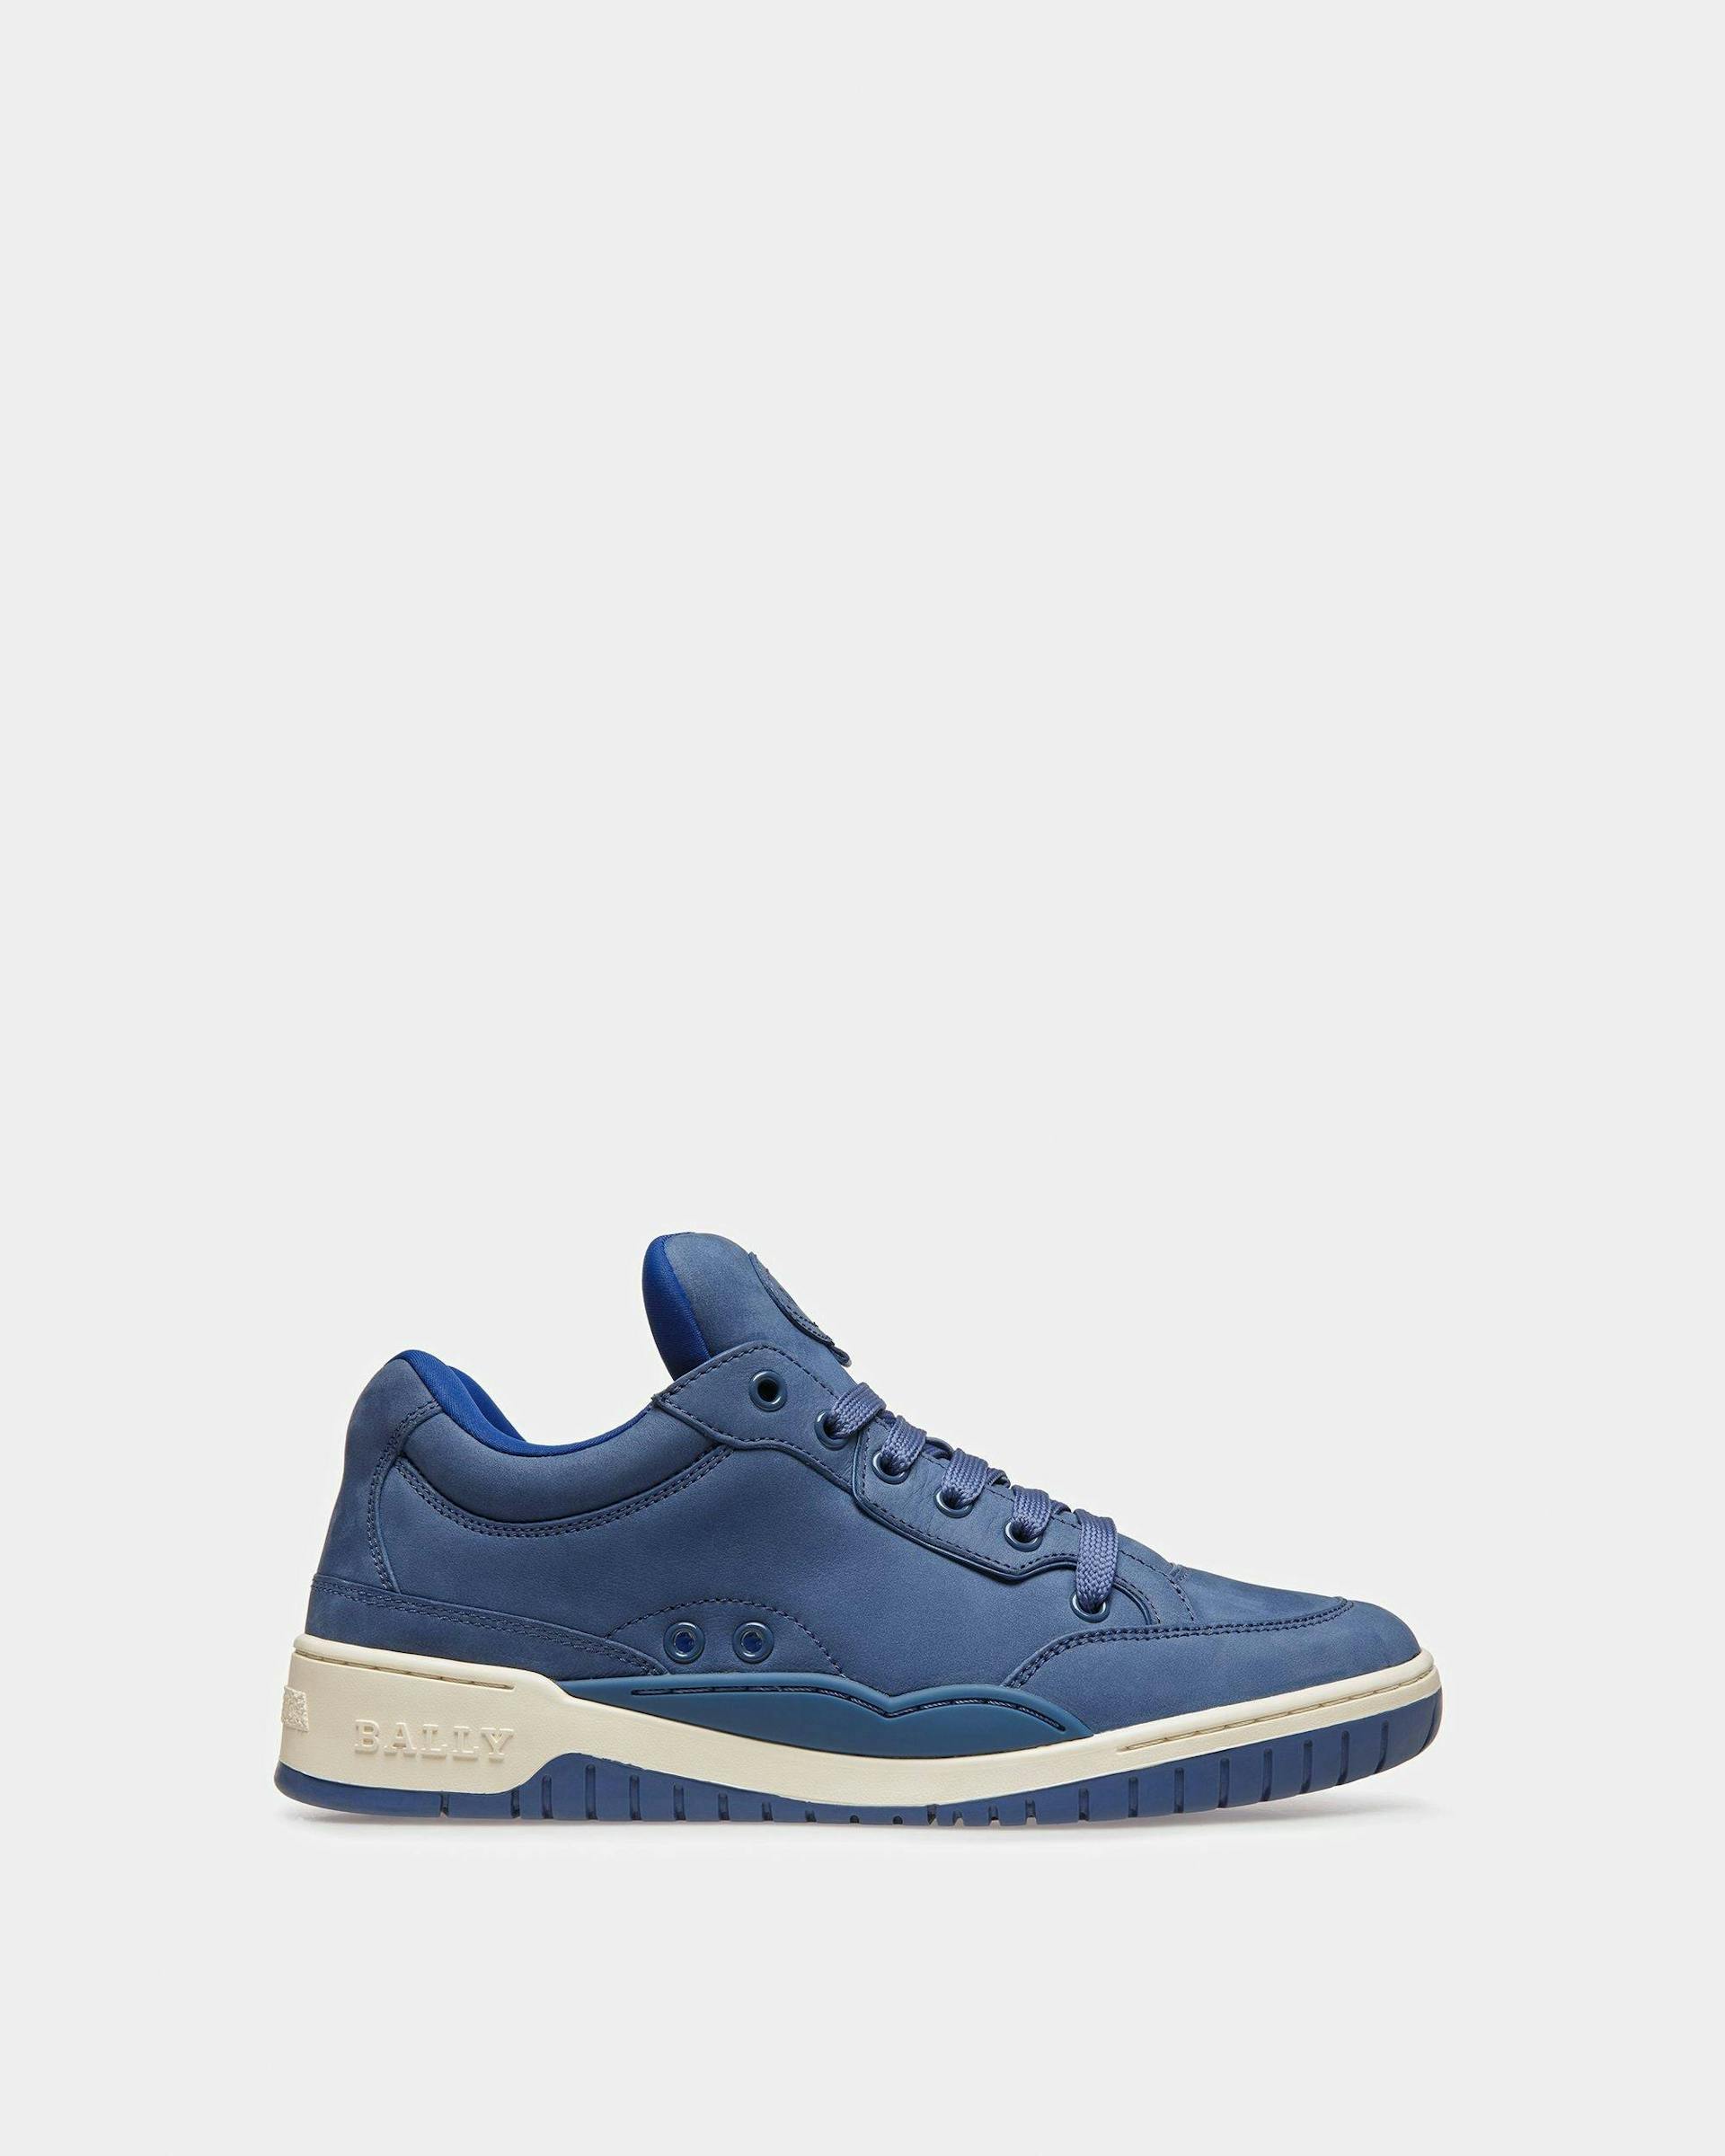 Kiro Leather Sneakers In Blue Neon - Men's - Bally - 01